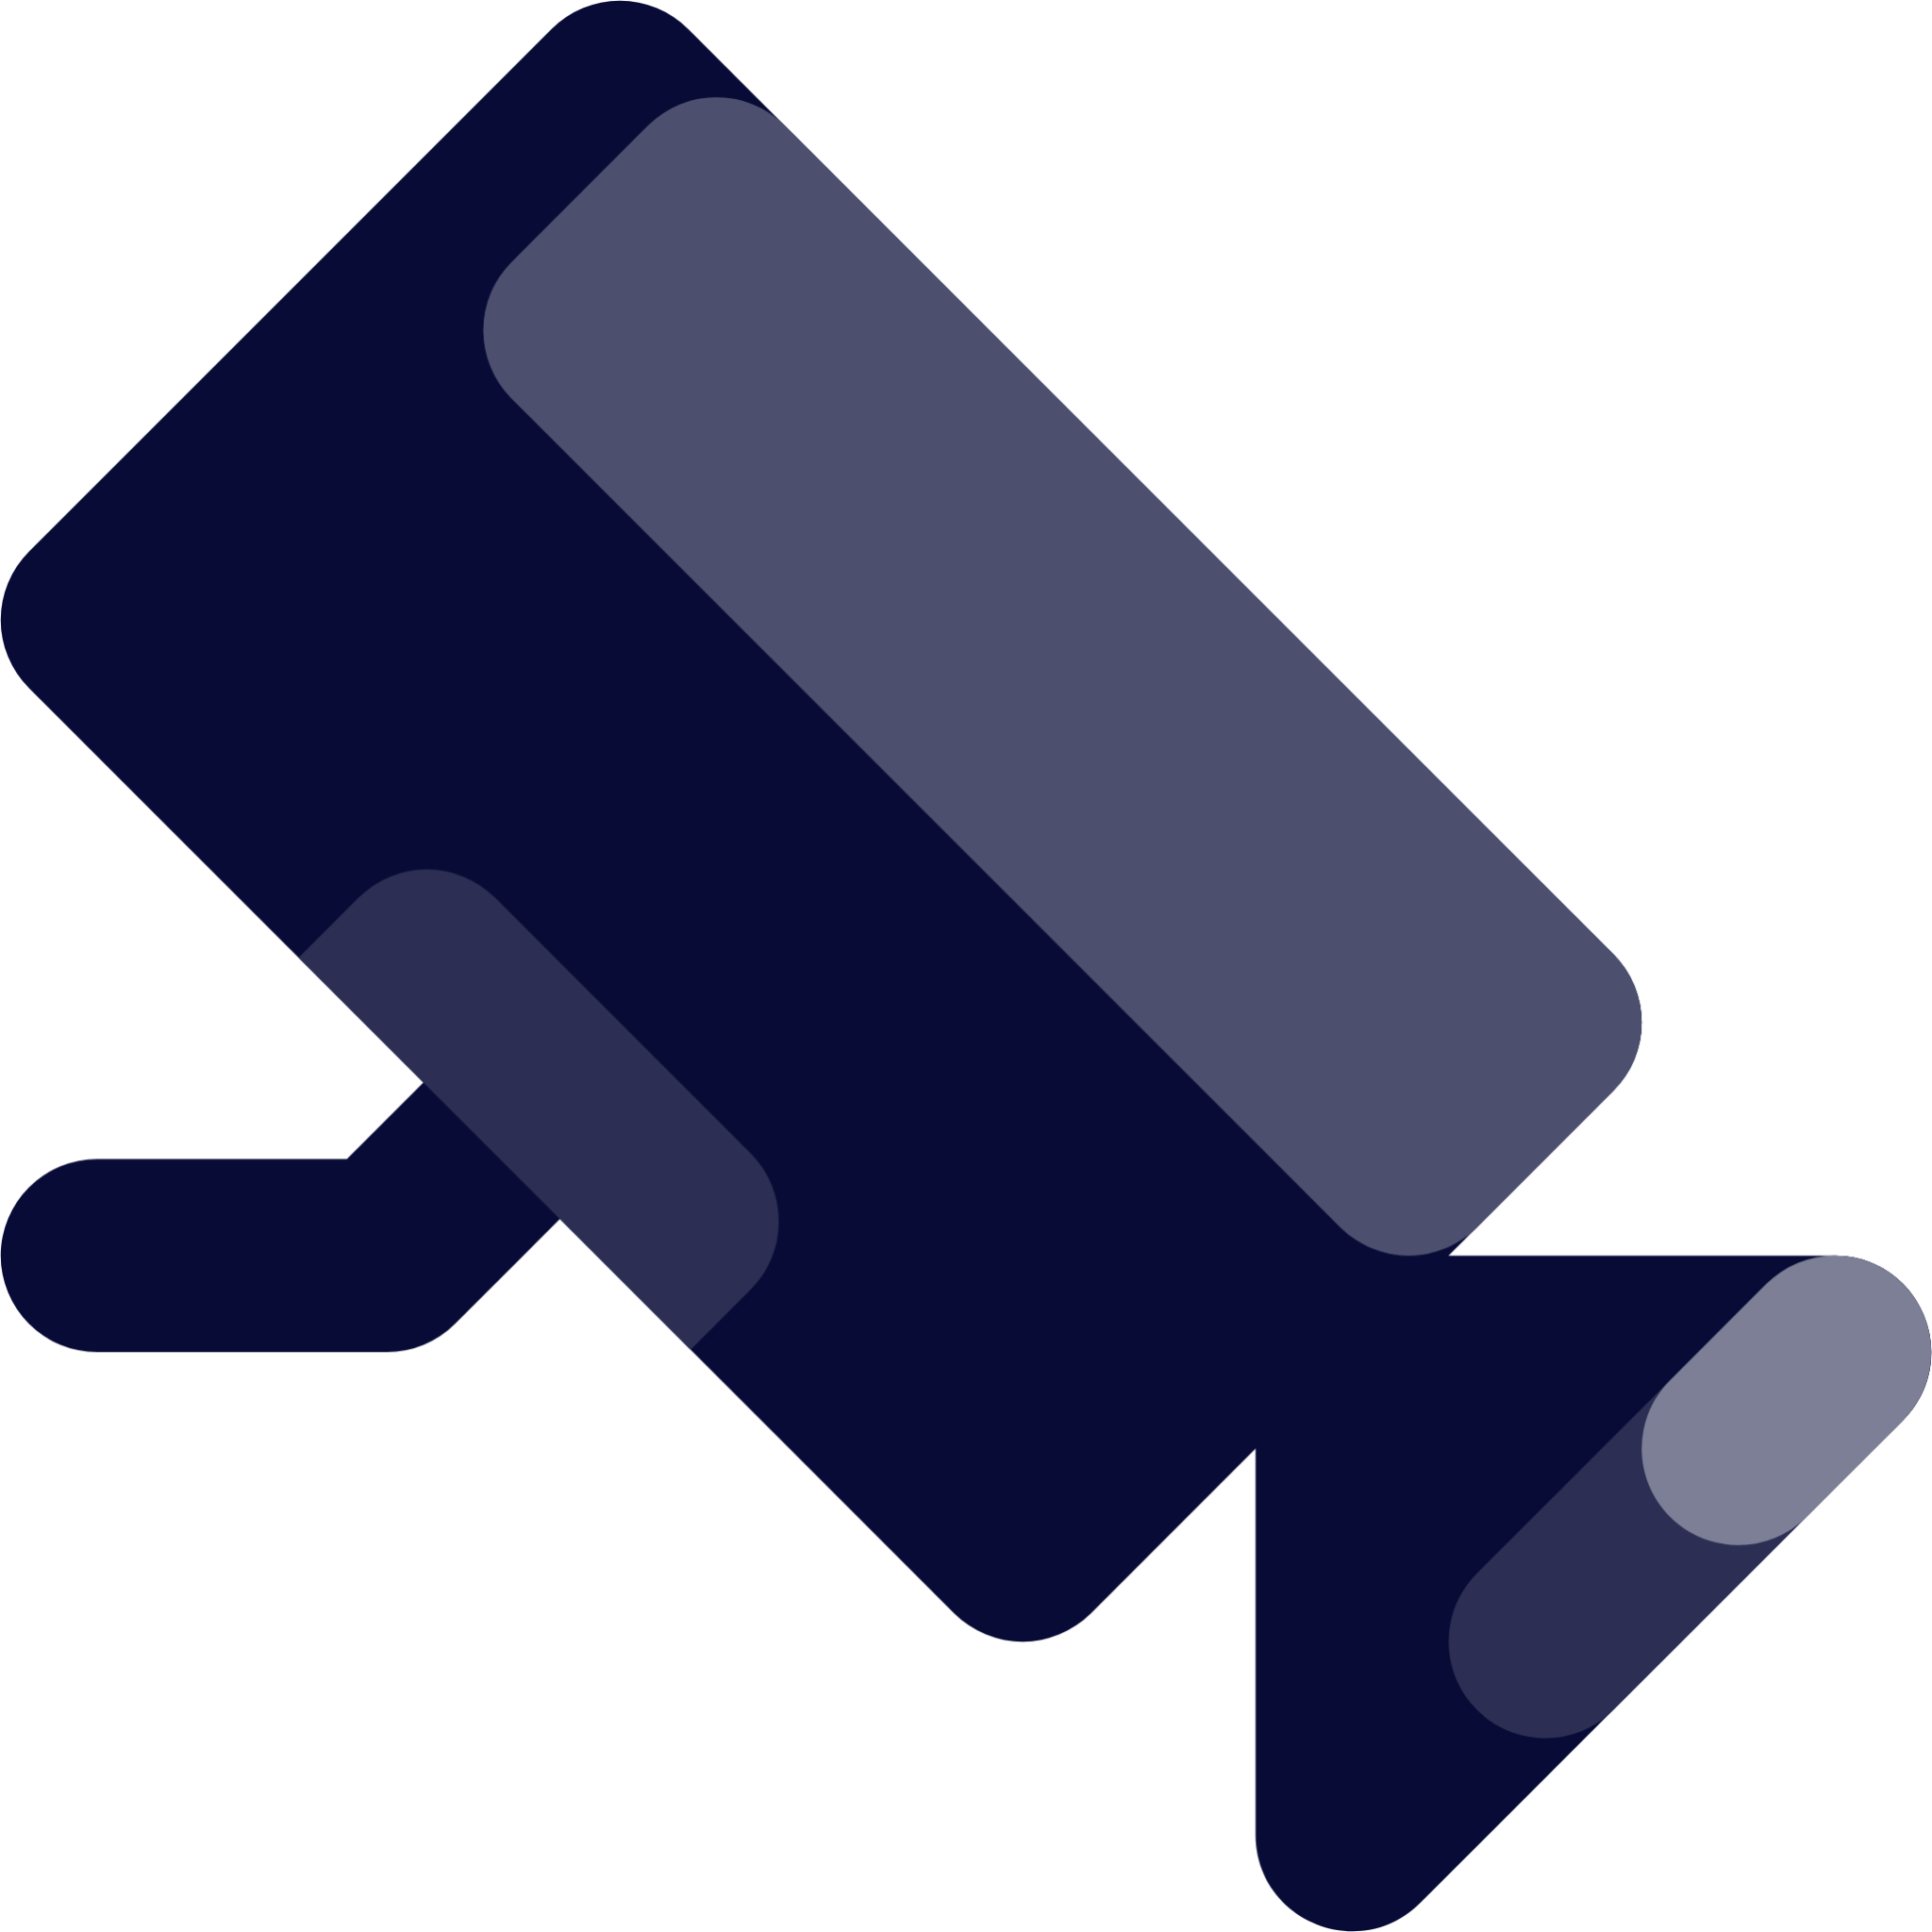 cctv camera logo